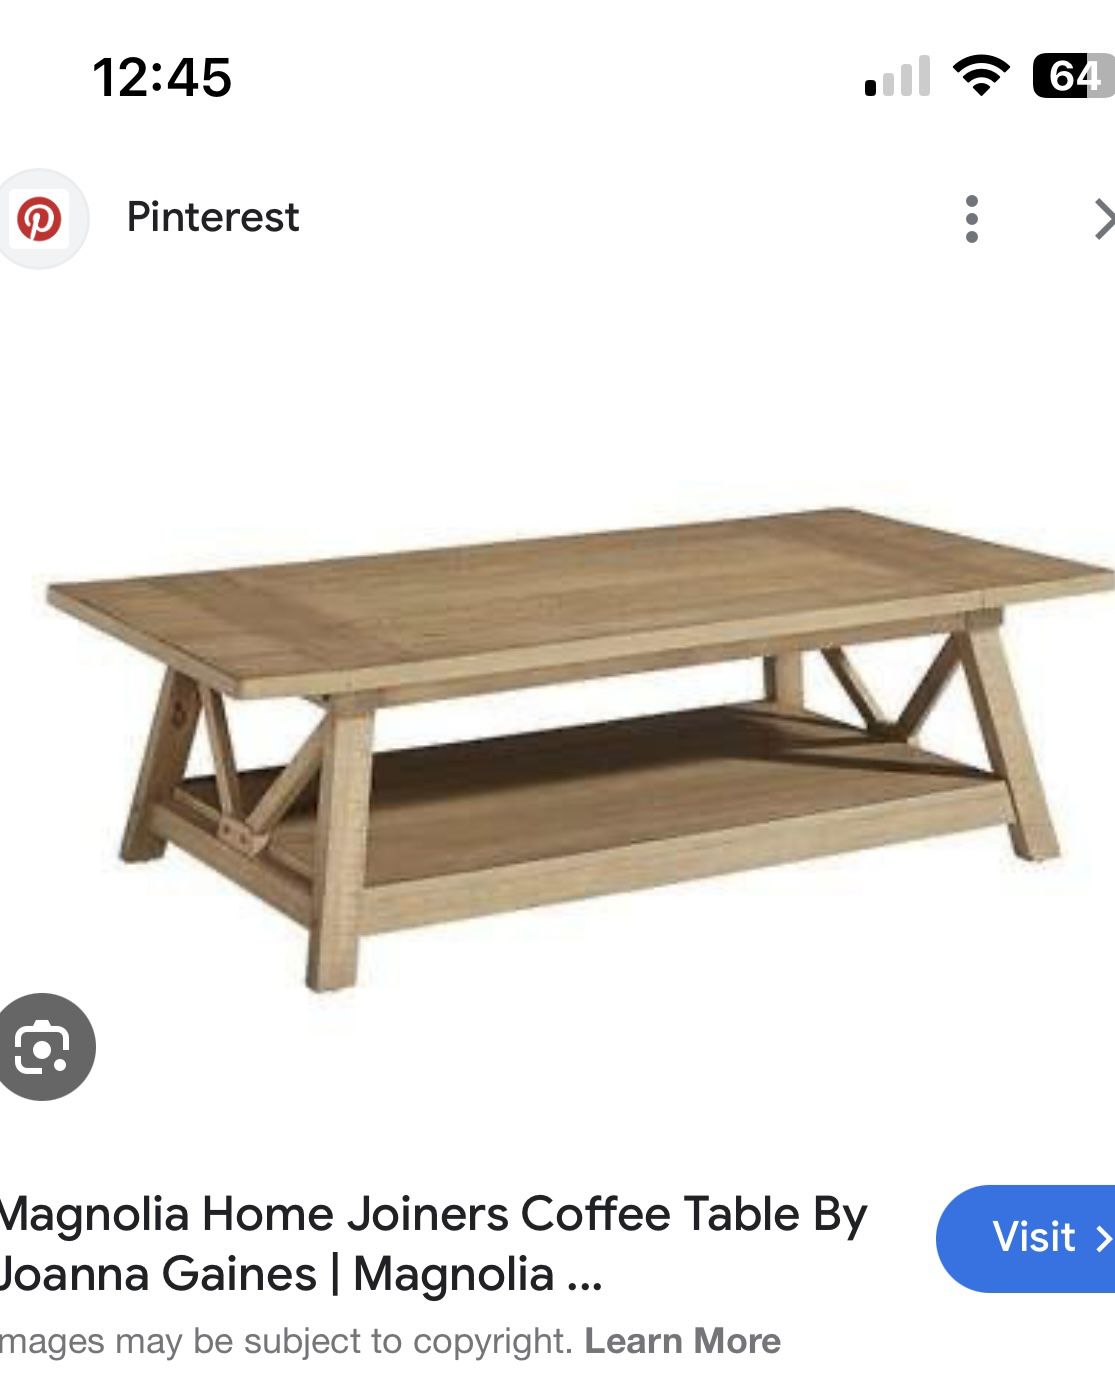 Magnolia Coffee Table